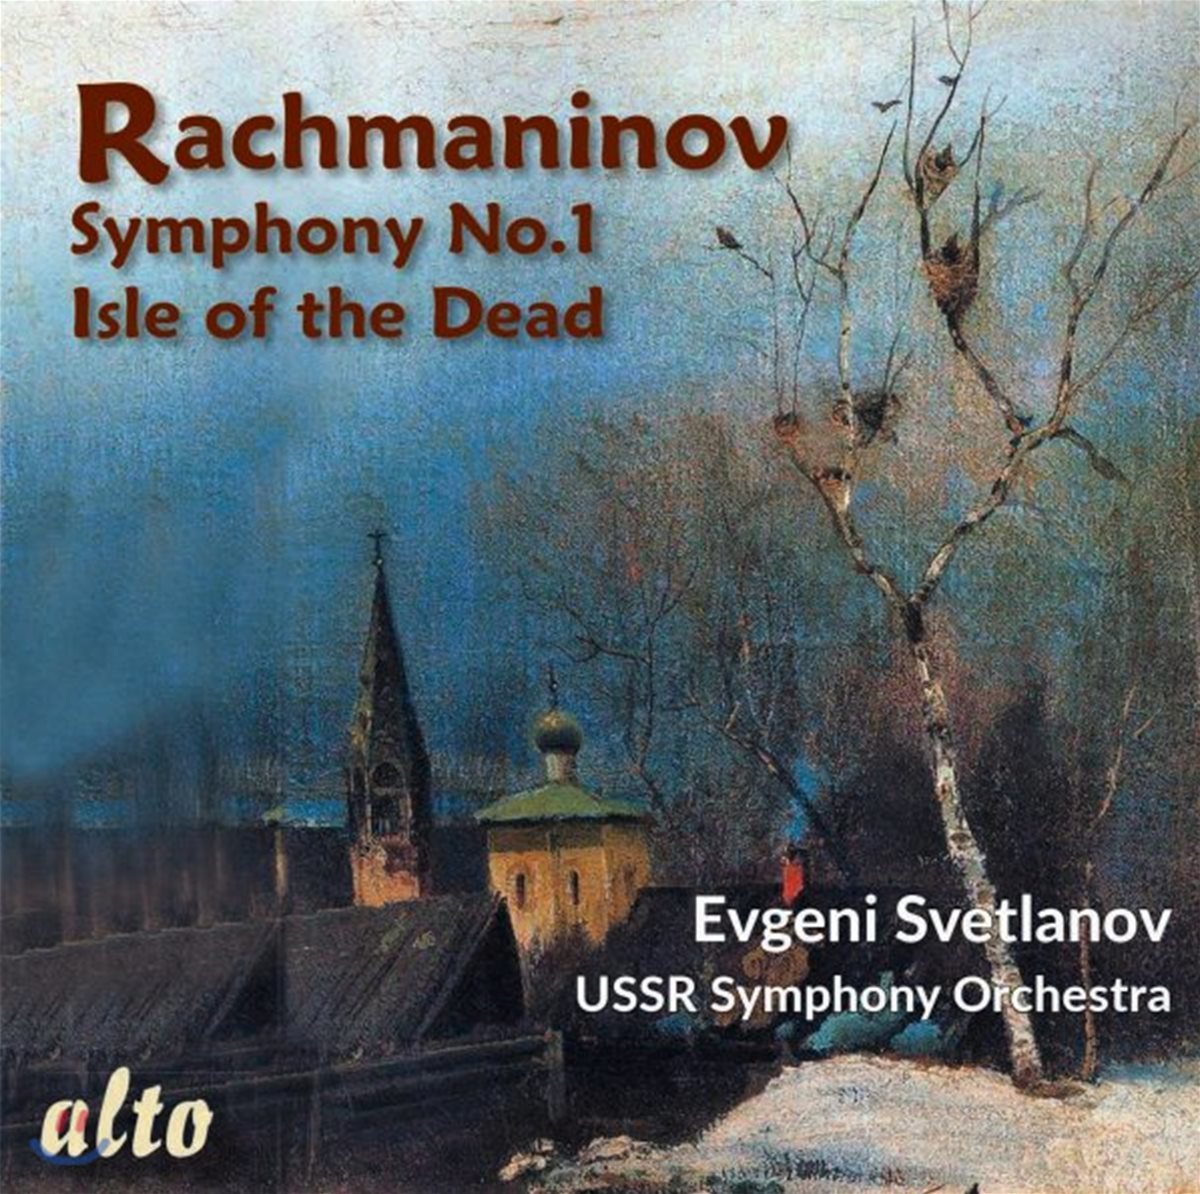 Evgeny Svetlanov 라흐마니노프: 교향곡 1번, 죽음의 섬 (Rachmaninov: Symphony No.1, Isle of the Dead)